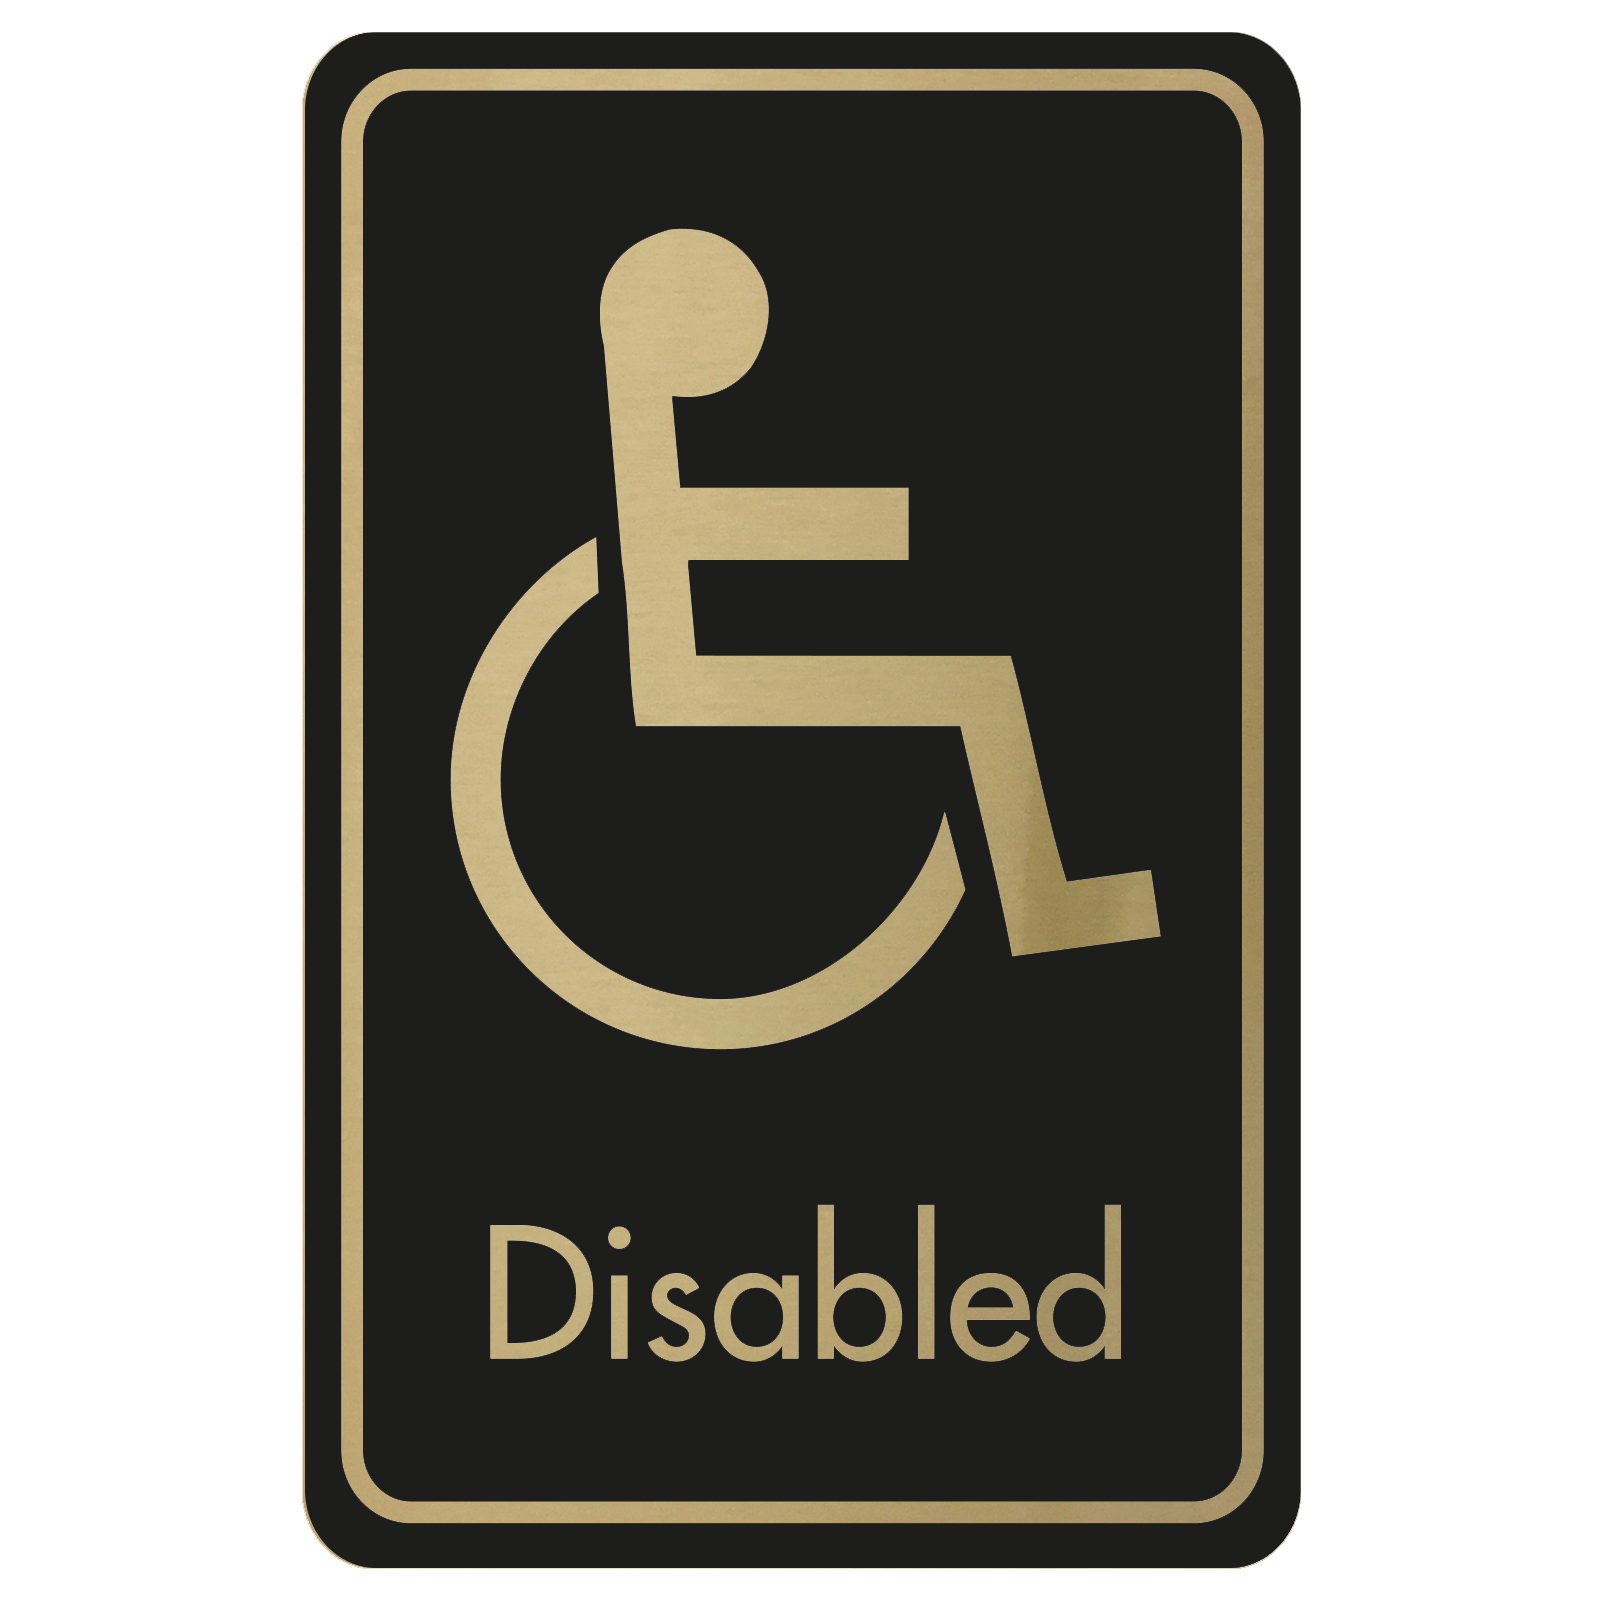 Large Disabled Door Sign - Gold on Black